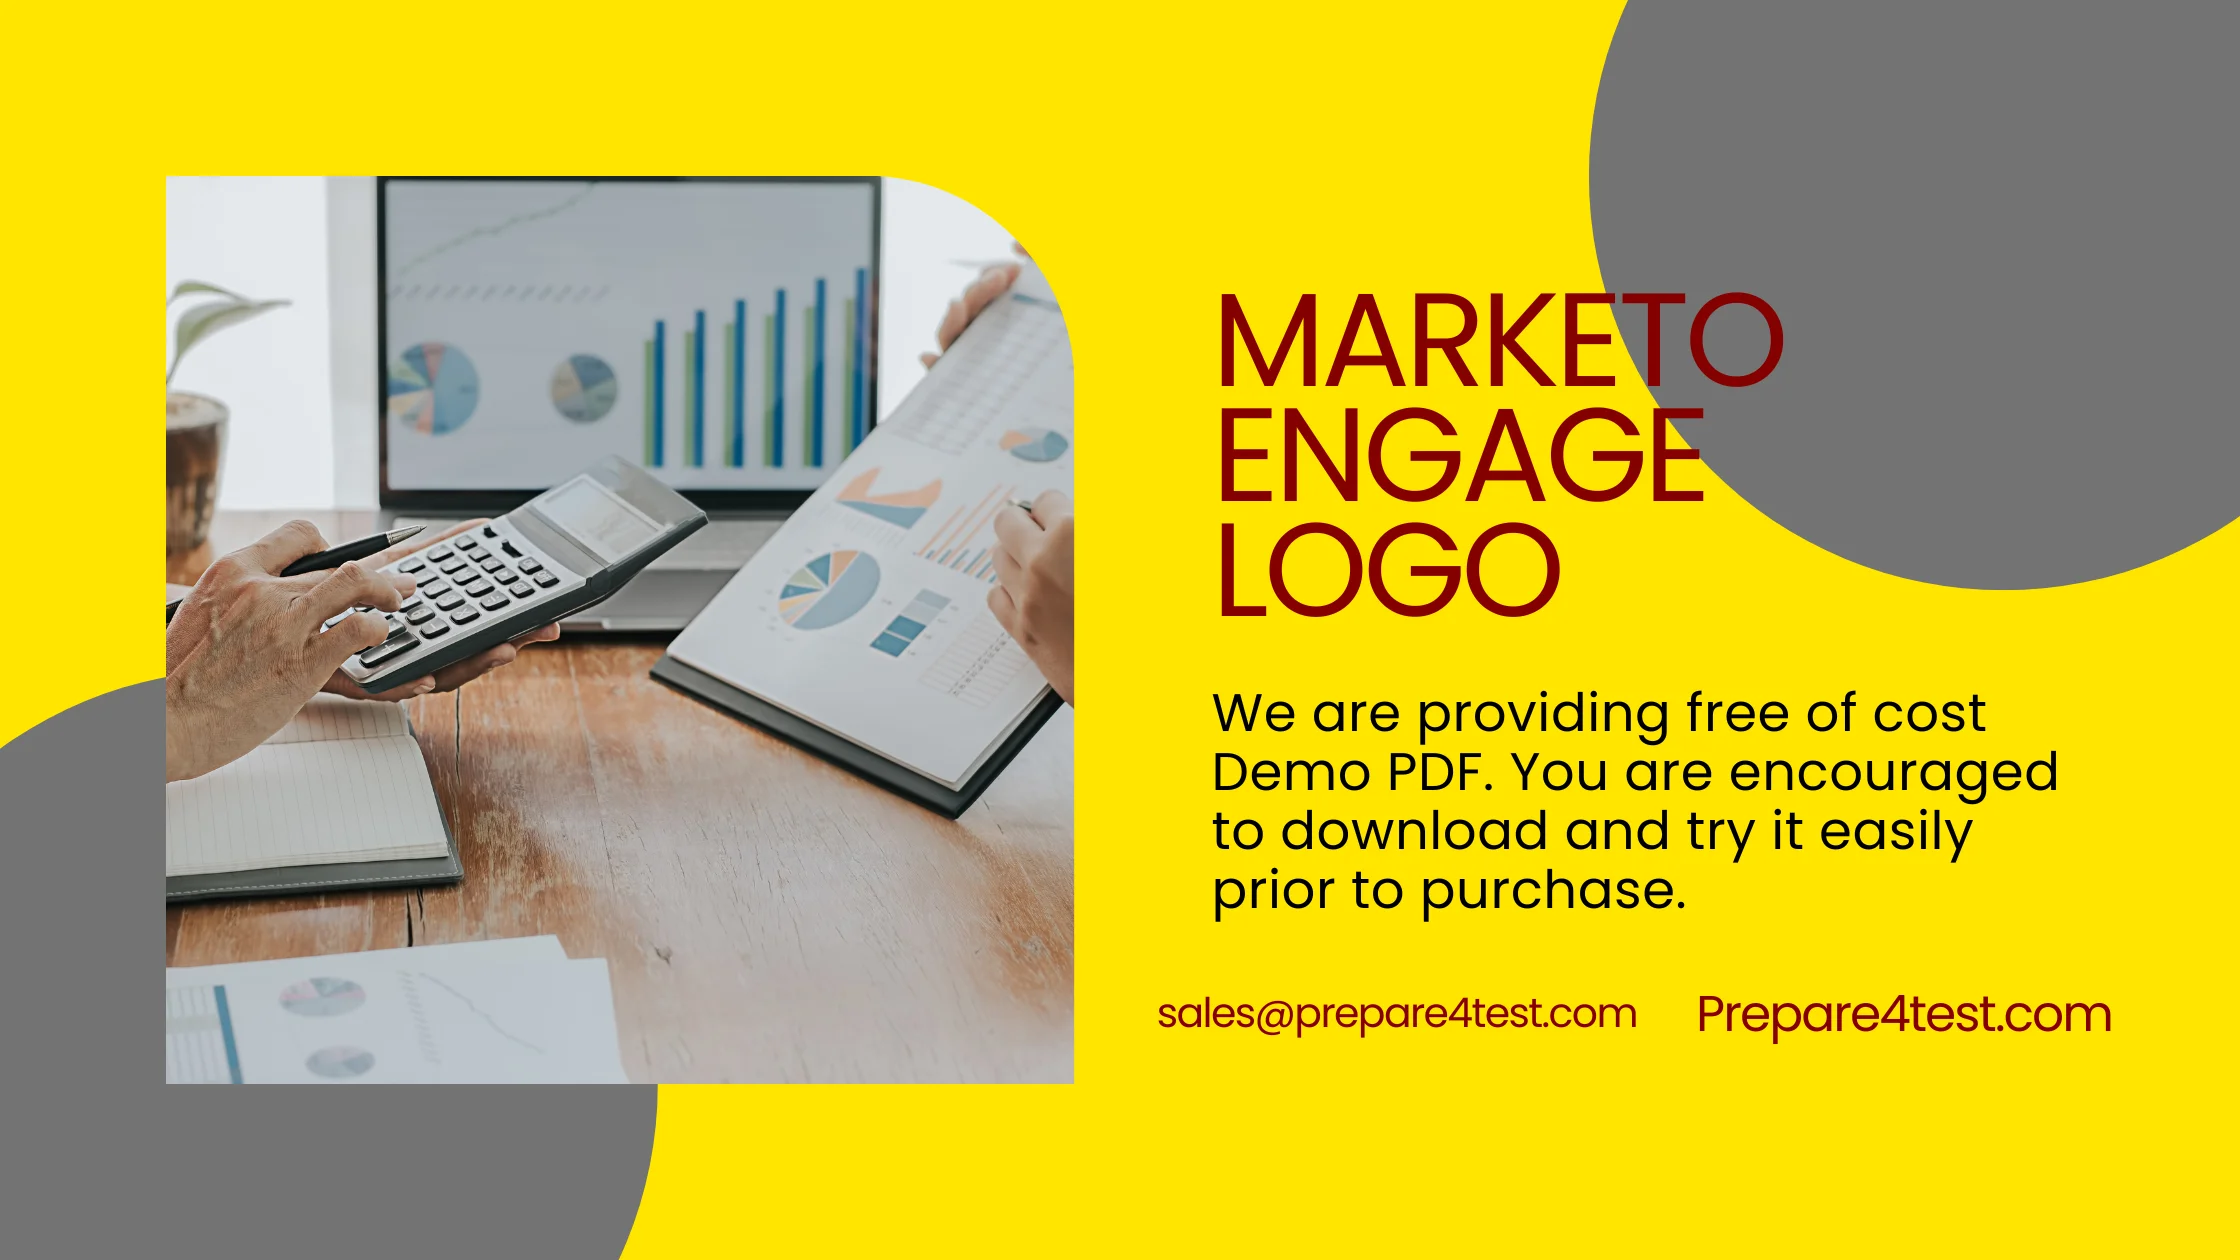 marketo engage logo promo